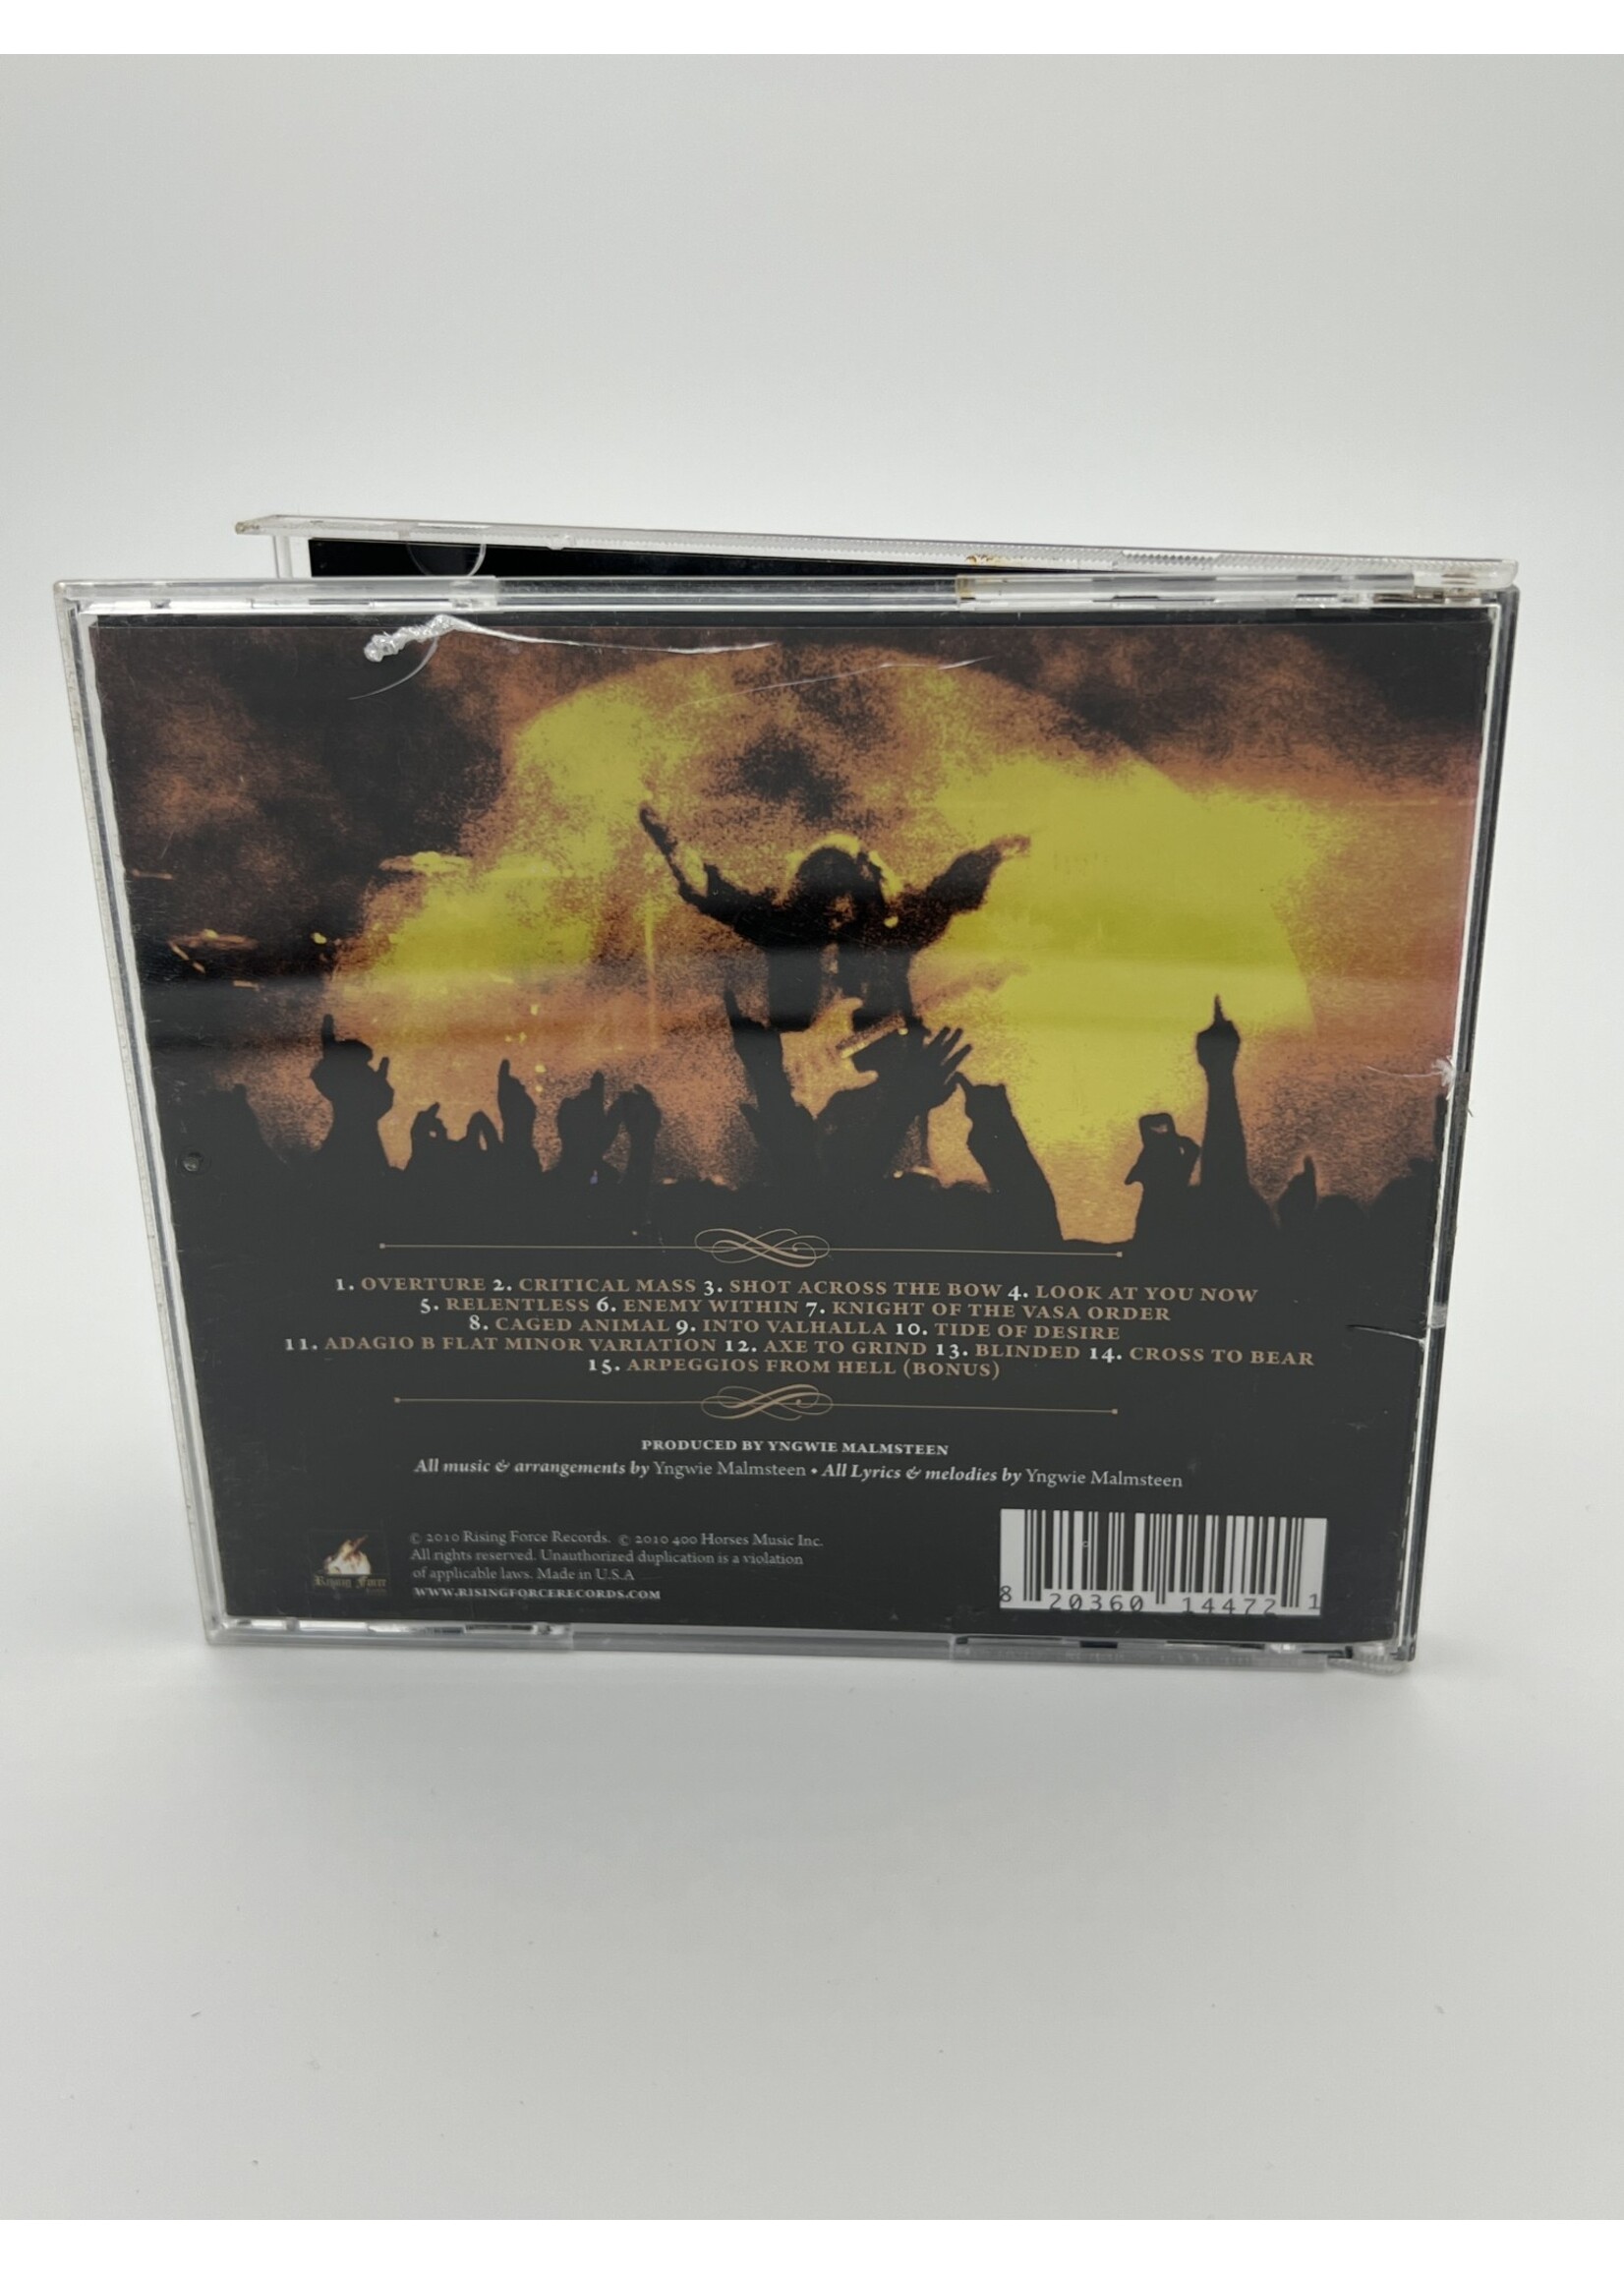 CD   Yngwie Malmsteen Relentless CD